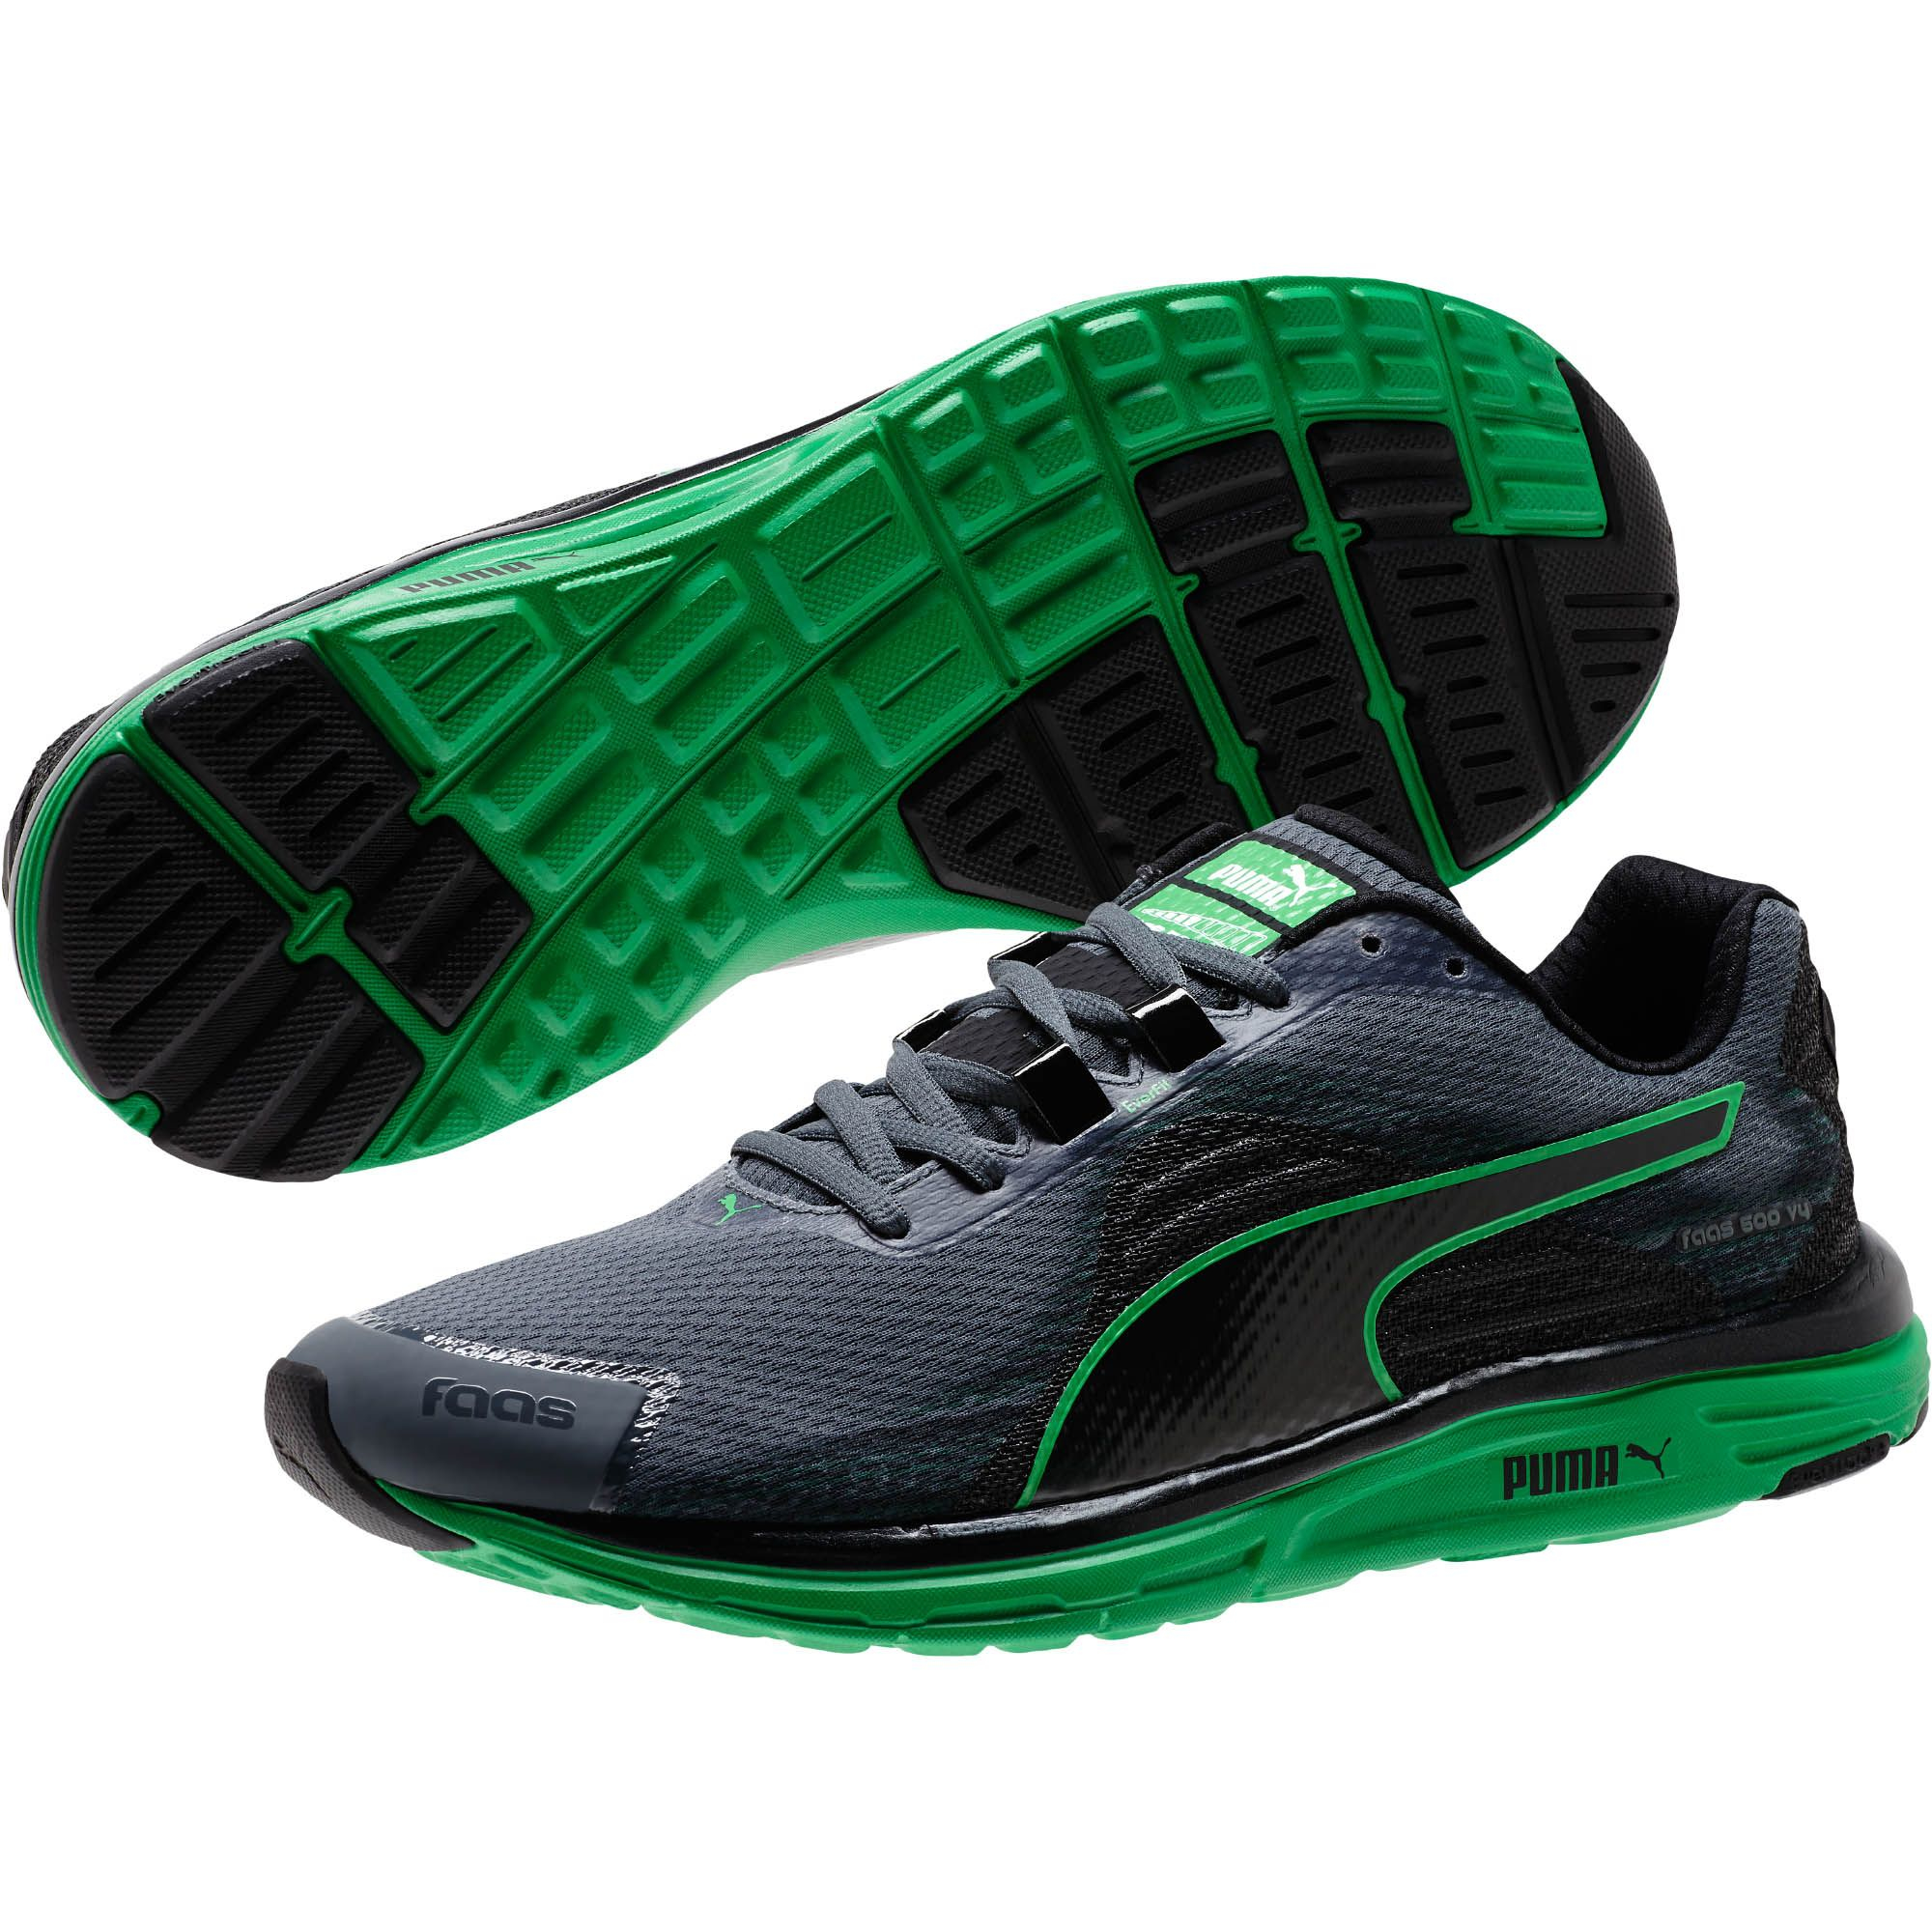 Lyst - Puma Faas 500 V4 Men's Running Shoes in Green for Men